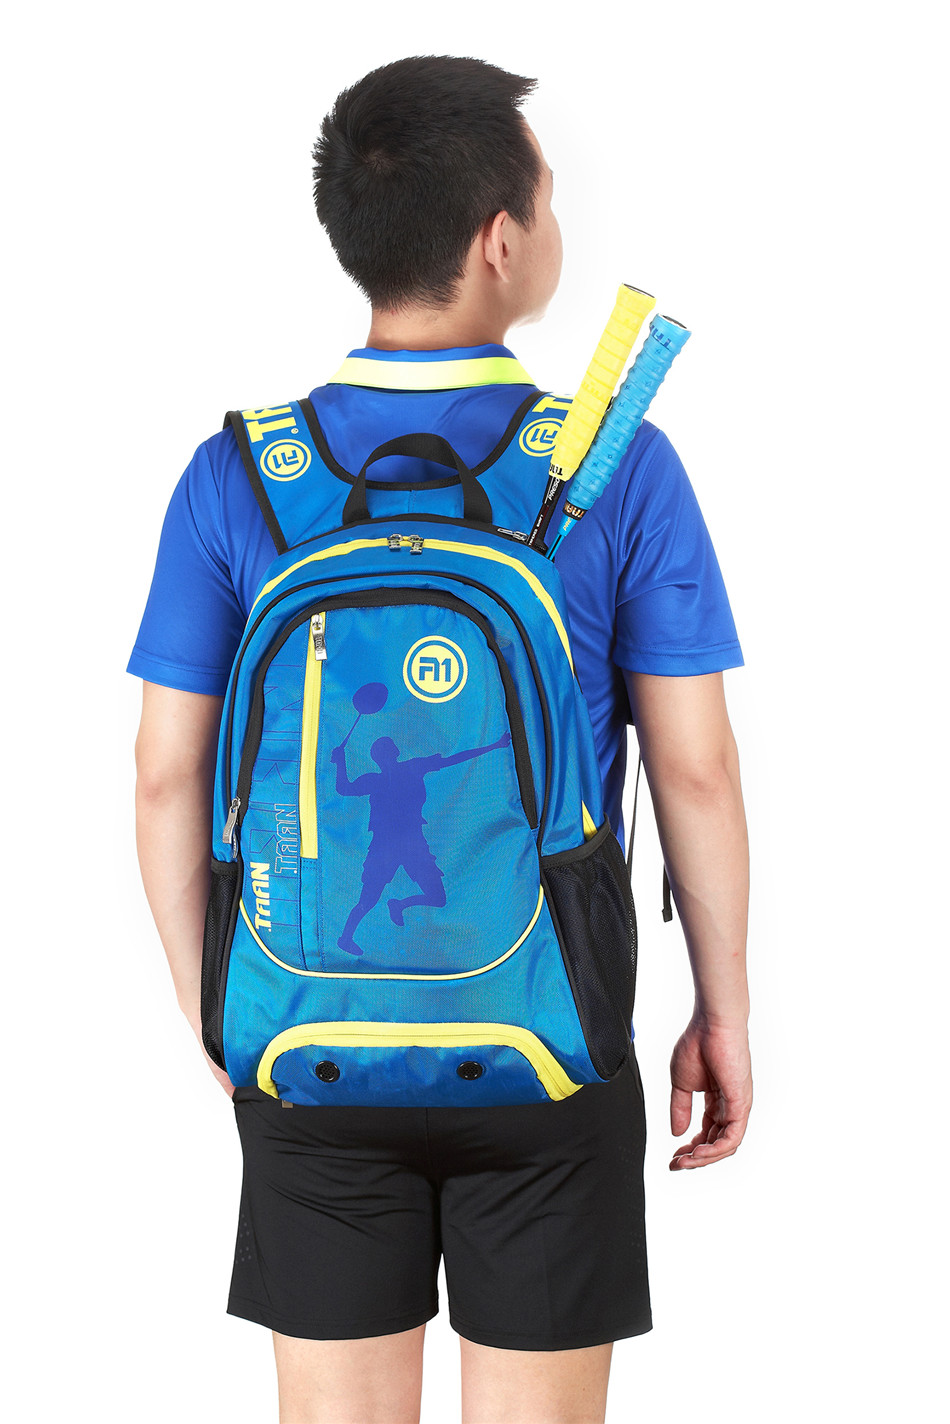 TAAN/泰昂运动包袋网羽双用 防水耐磨款BAG 1009 运动双肩包 